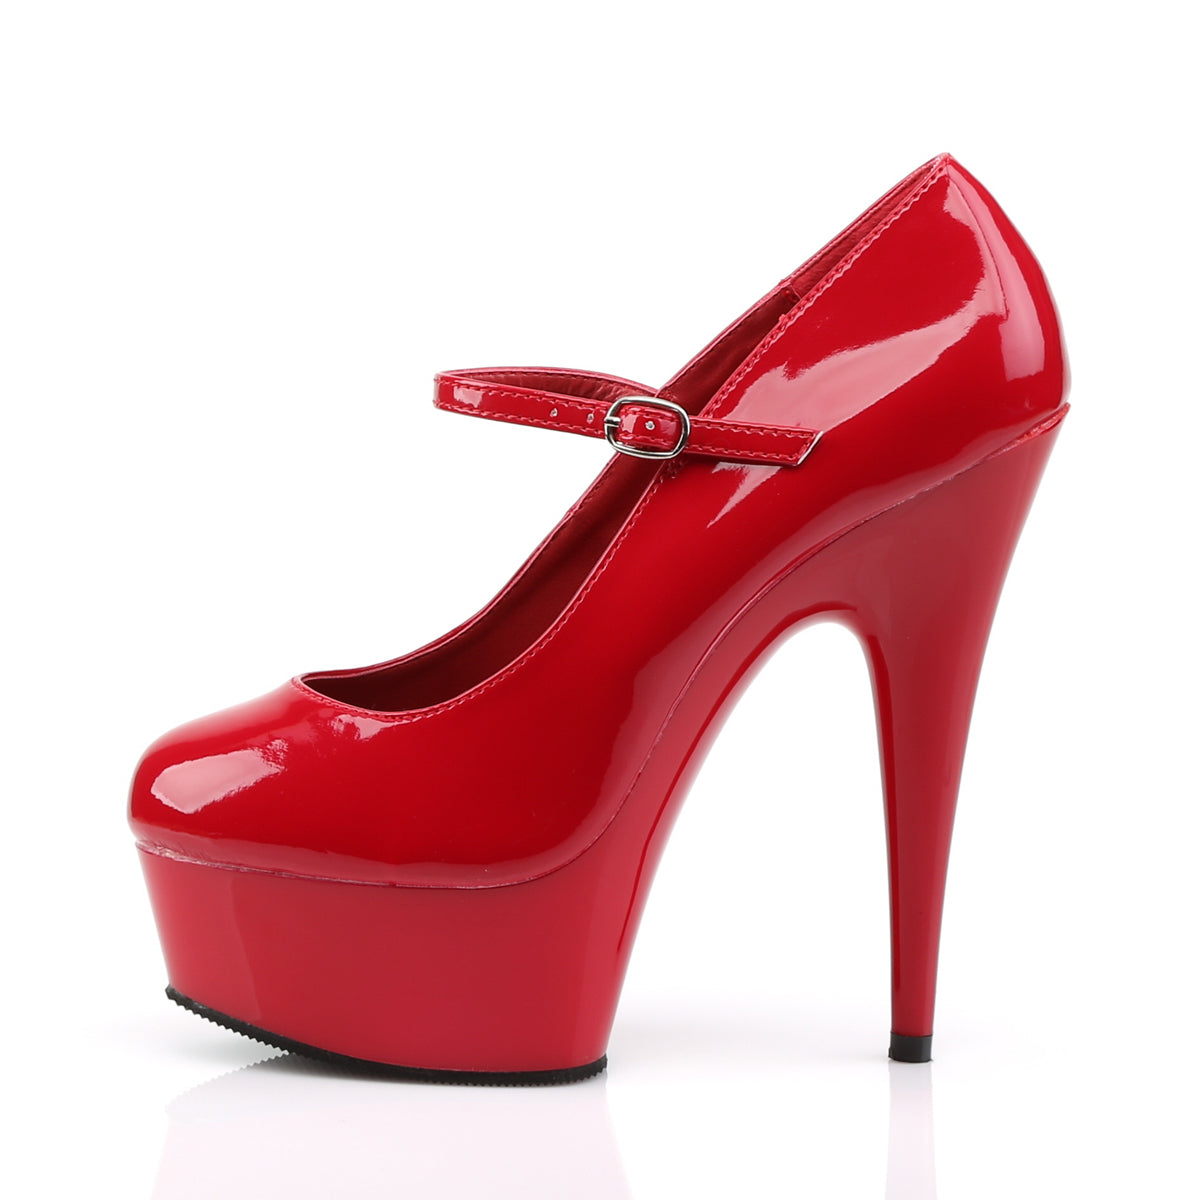 Pleaser Sandalias para mujer DELIGHT-687 rojo / rojo